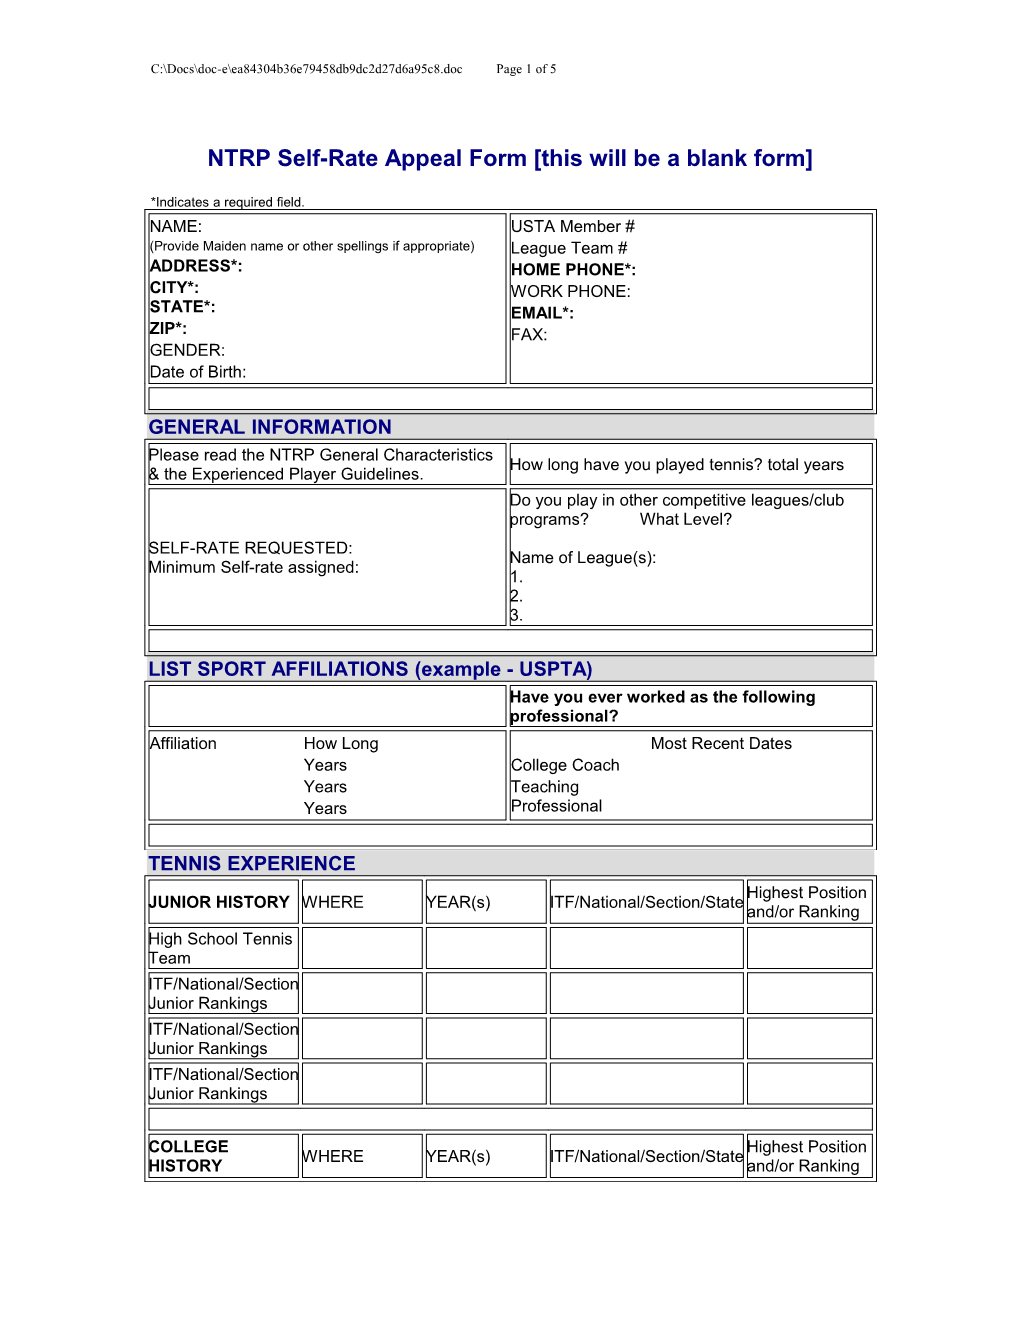 NTRP Self-Rate Appeal Form